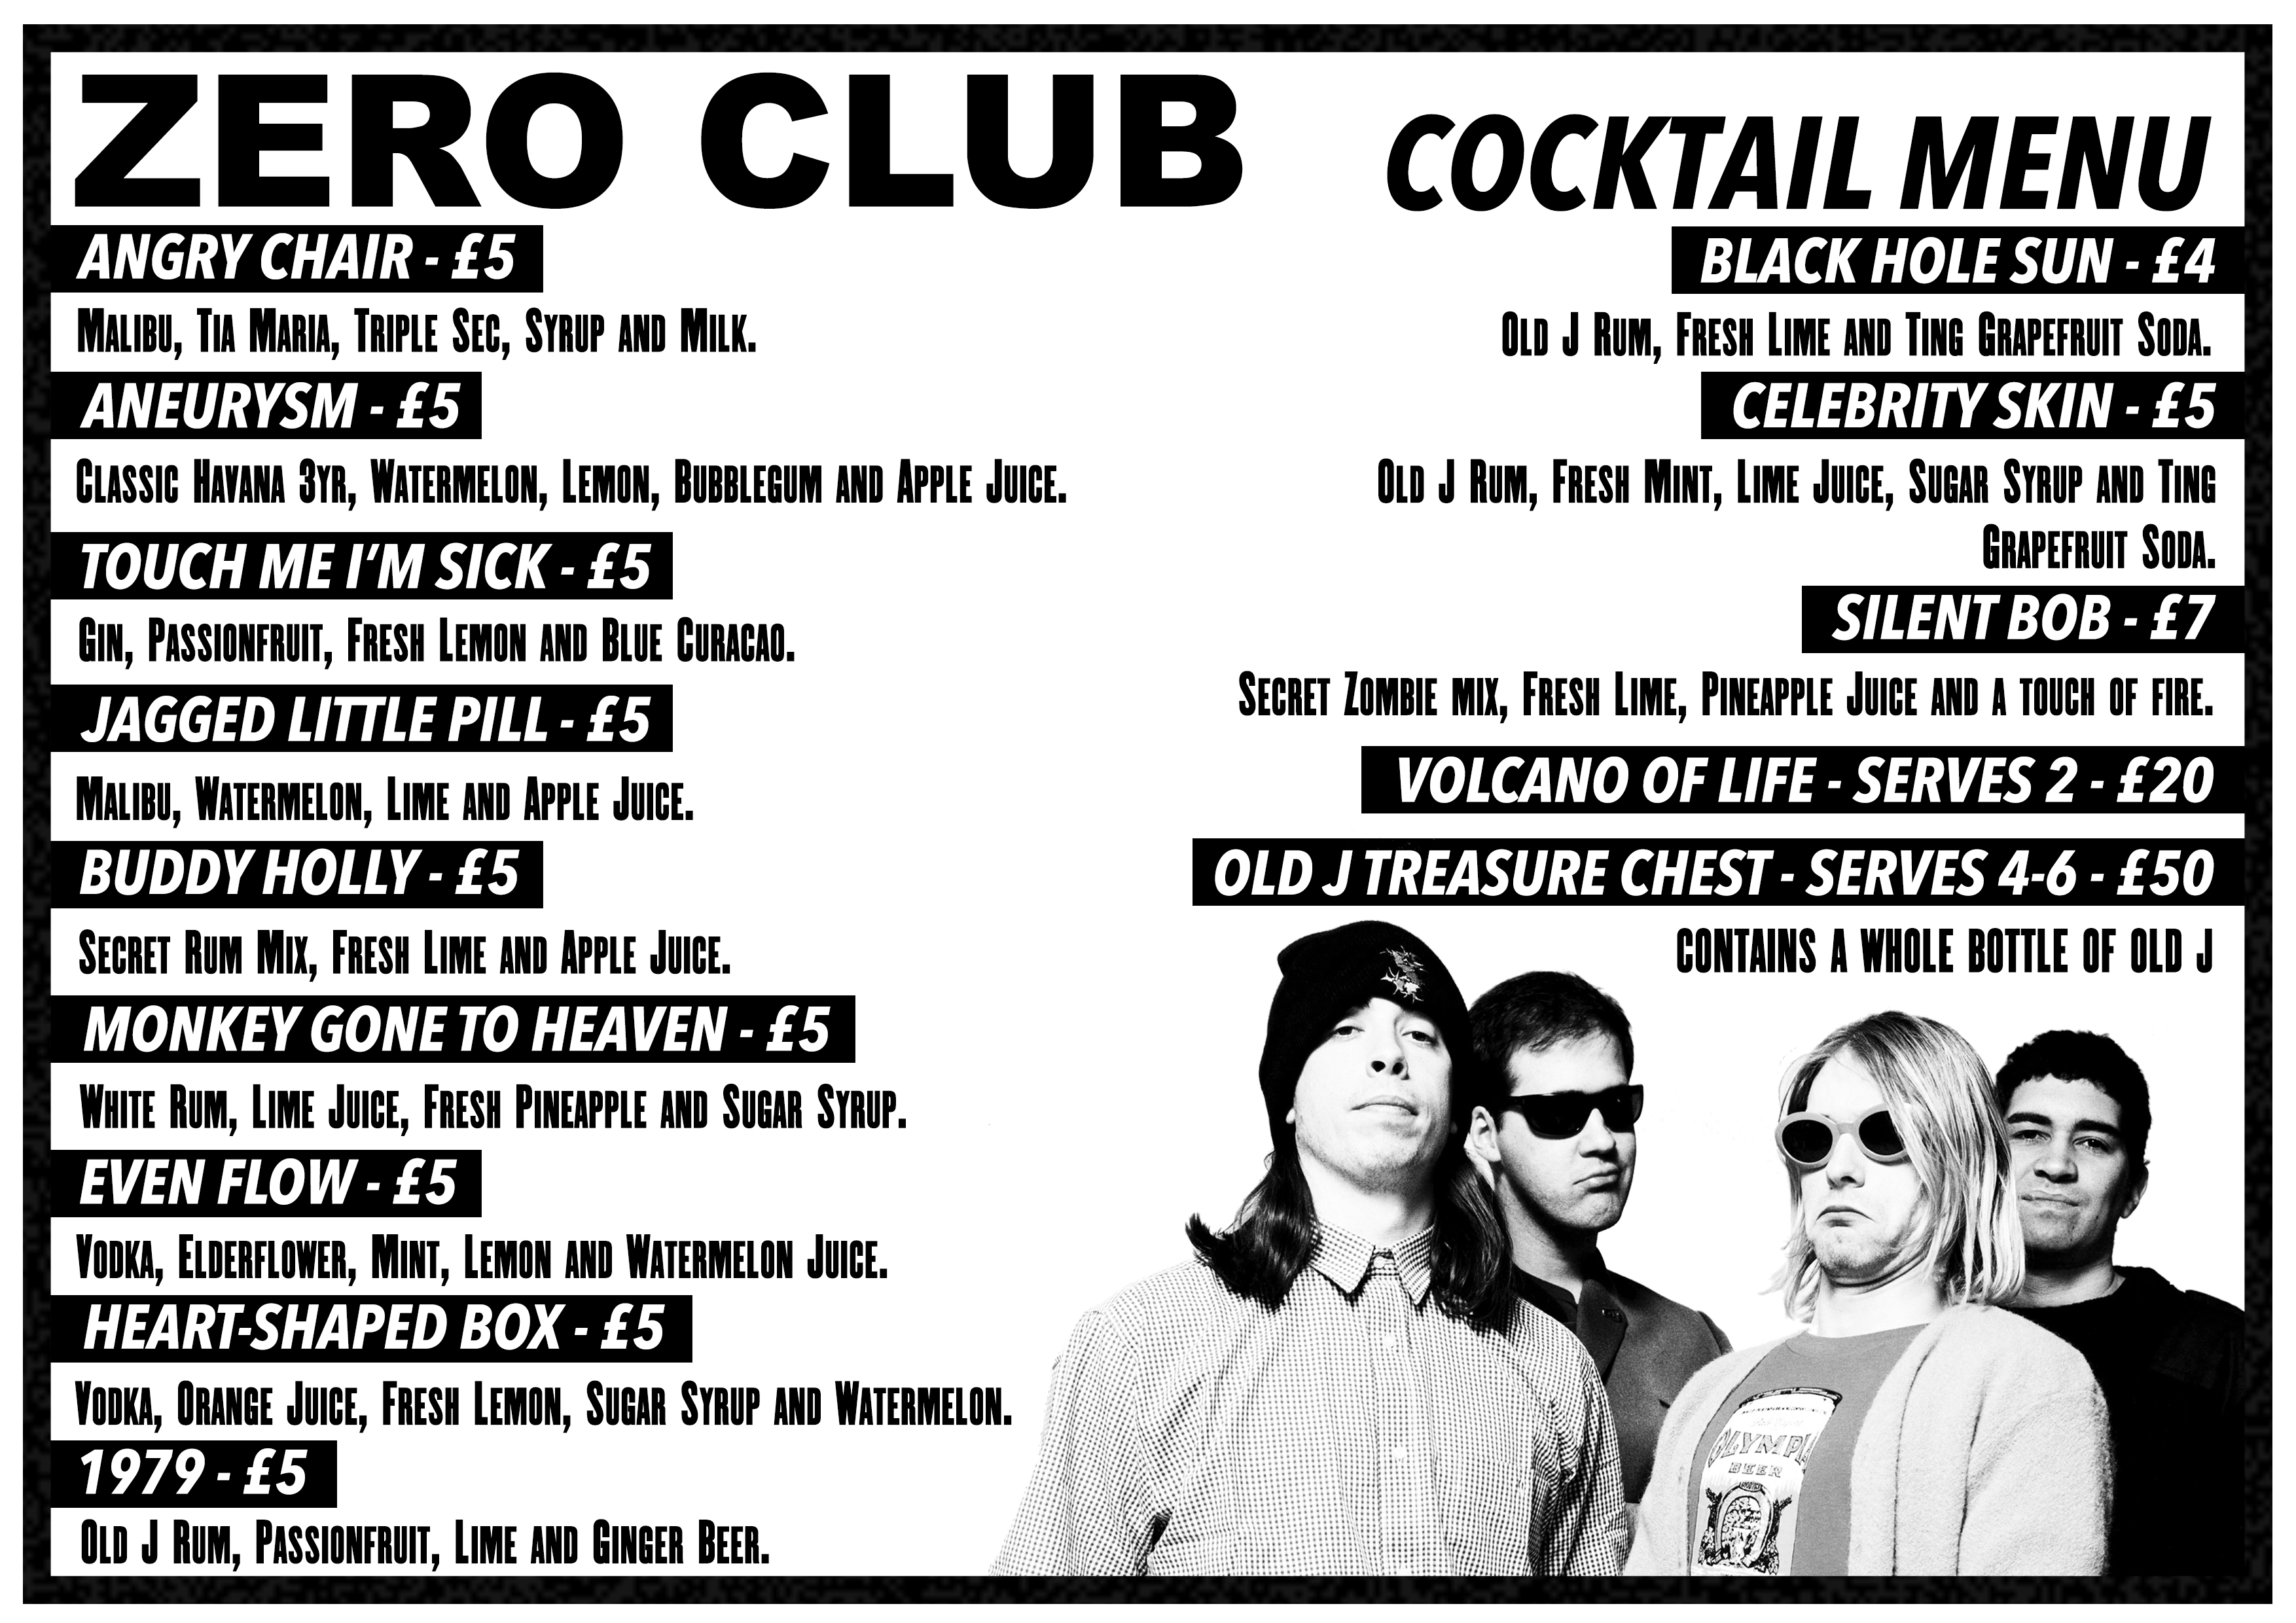 Zero Club Cocktail Menu at Zombie Shack - Red Cardinal Music